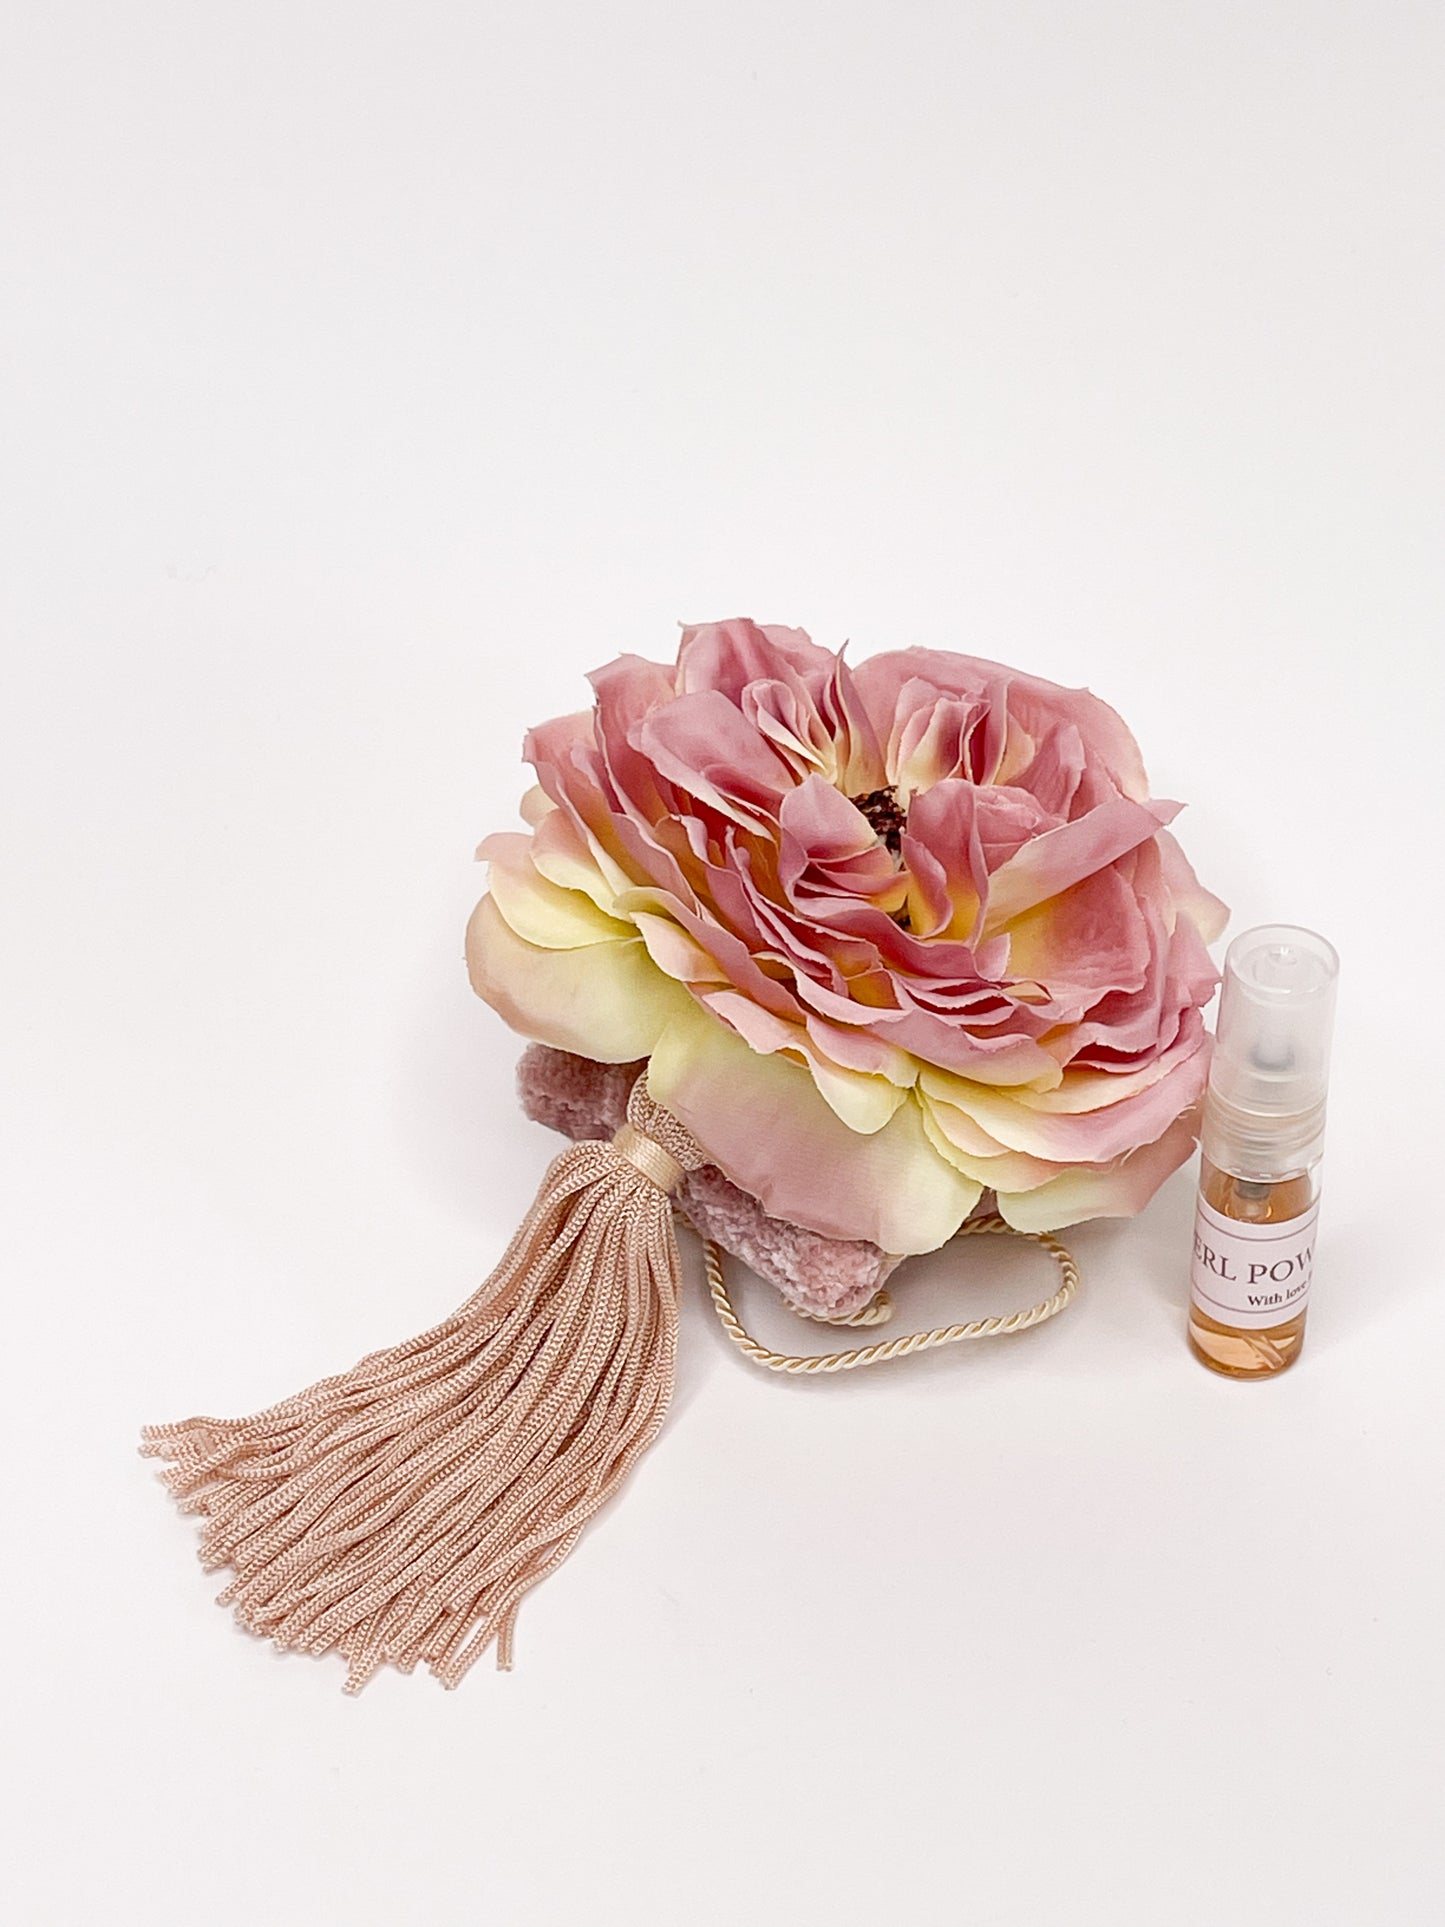 Hanging fragrance "Pearl Rose"